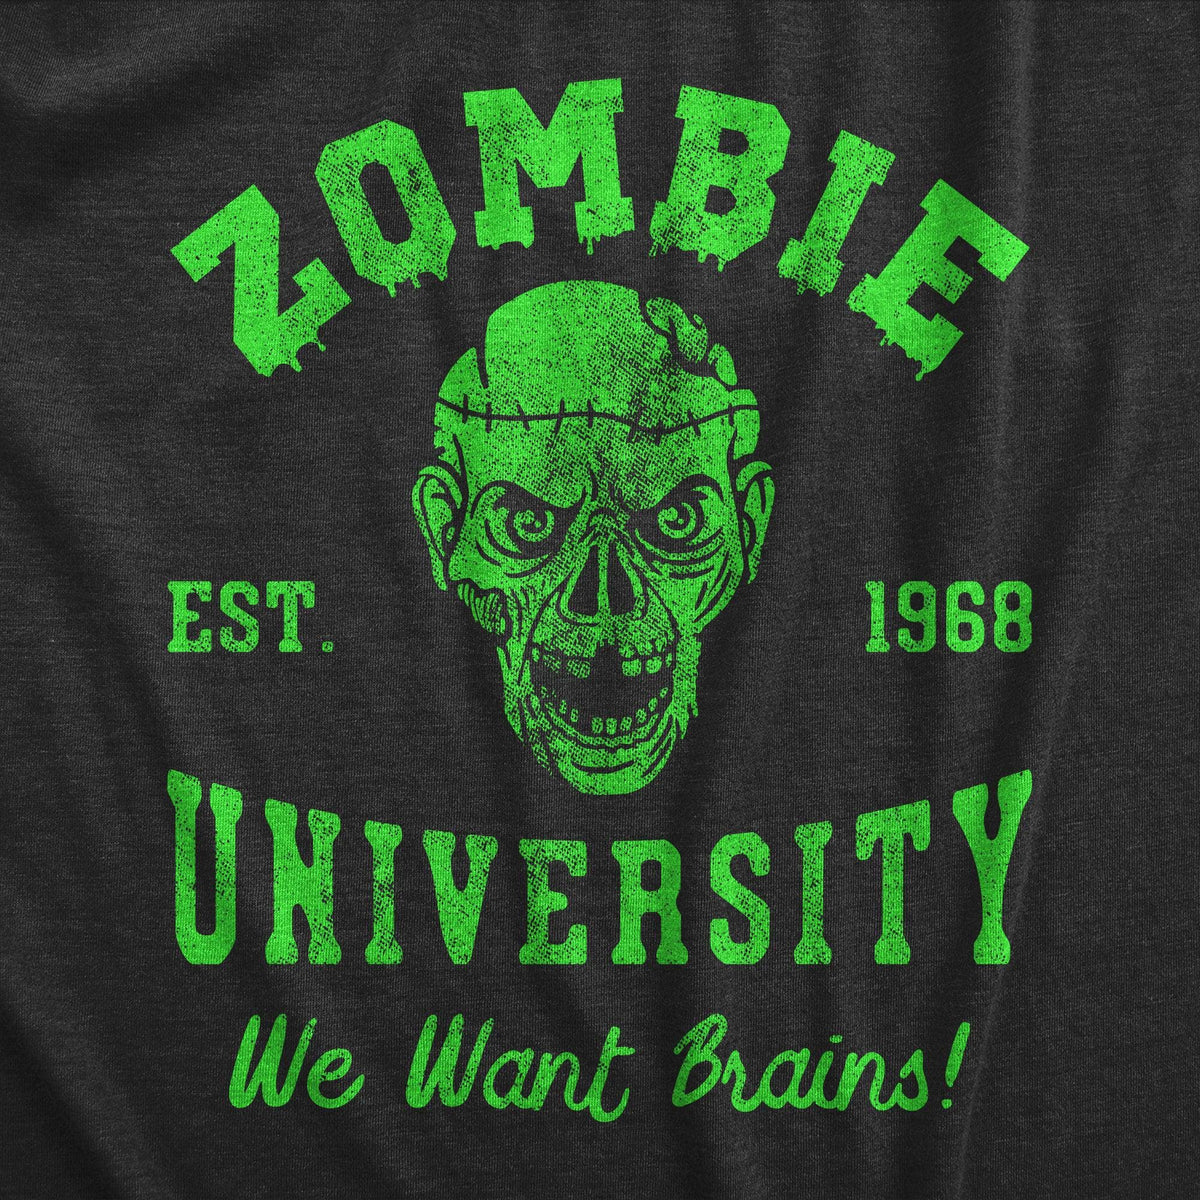 Zombie University Men&#39;s Tshirt  -  Crazy Dog T-Shirts